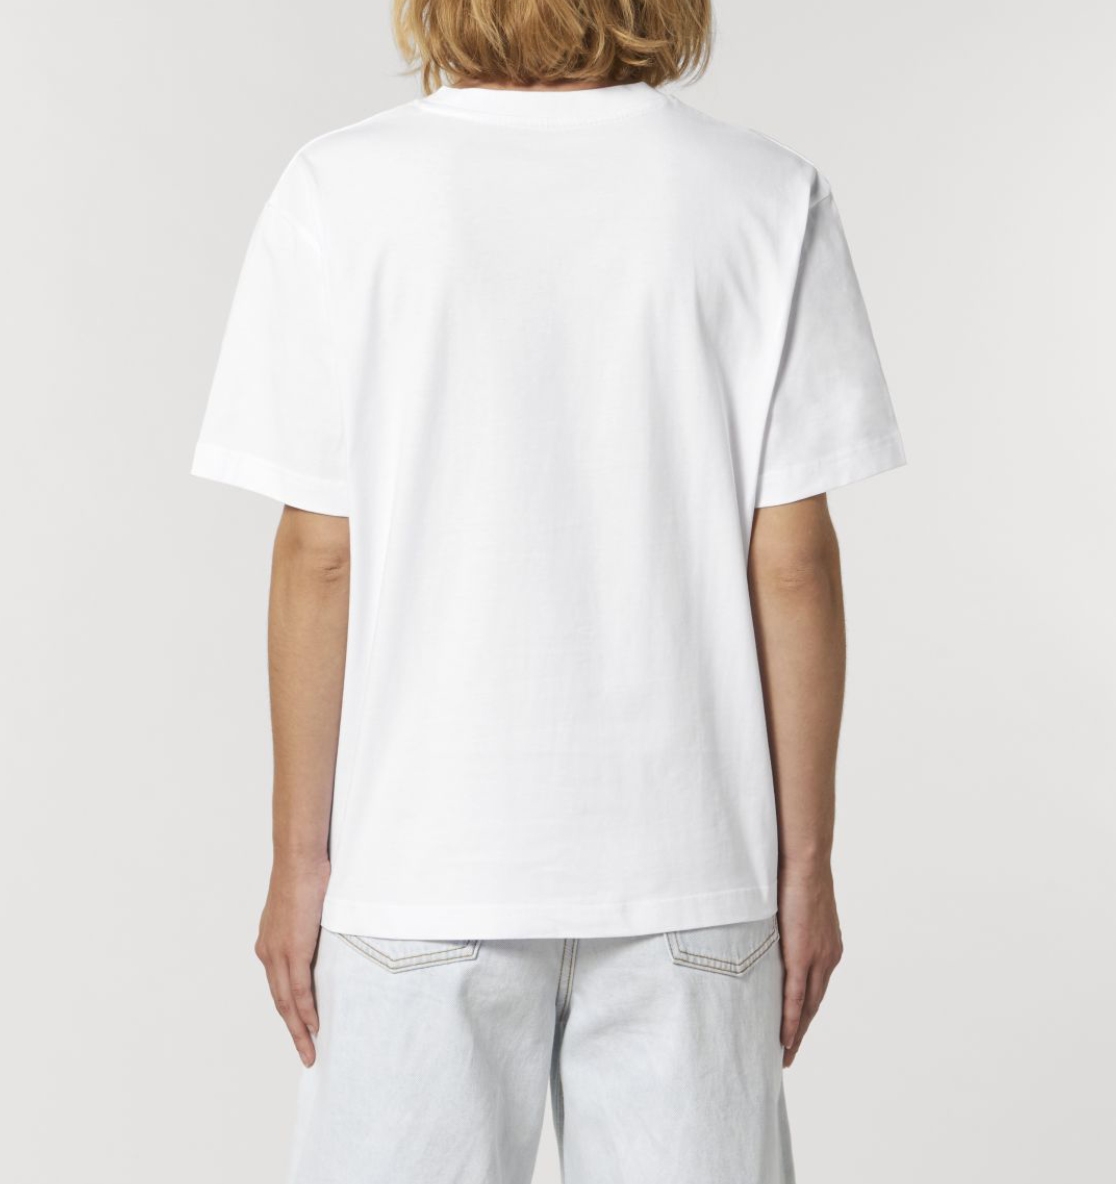 im flow, typo & texte vegan gedruckt auf organic relaxed Shirt, faibleshop